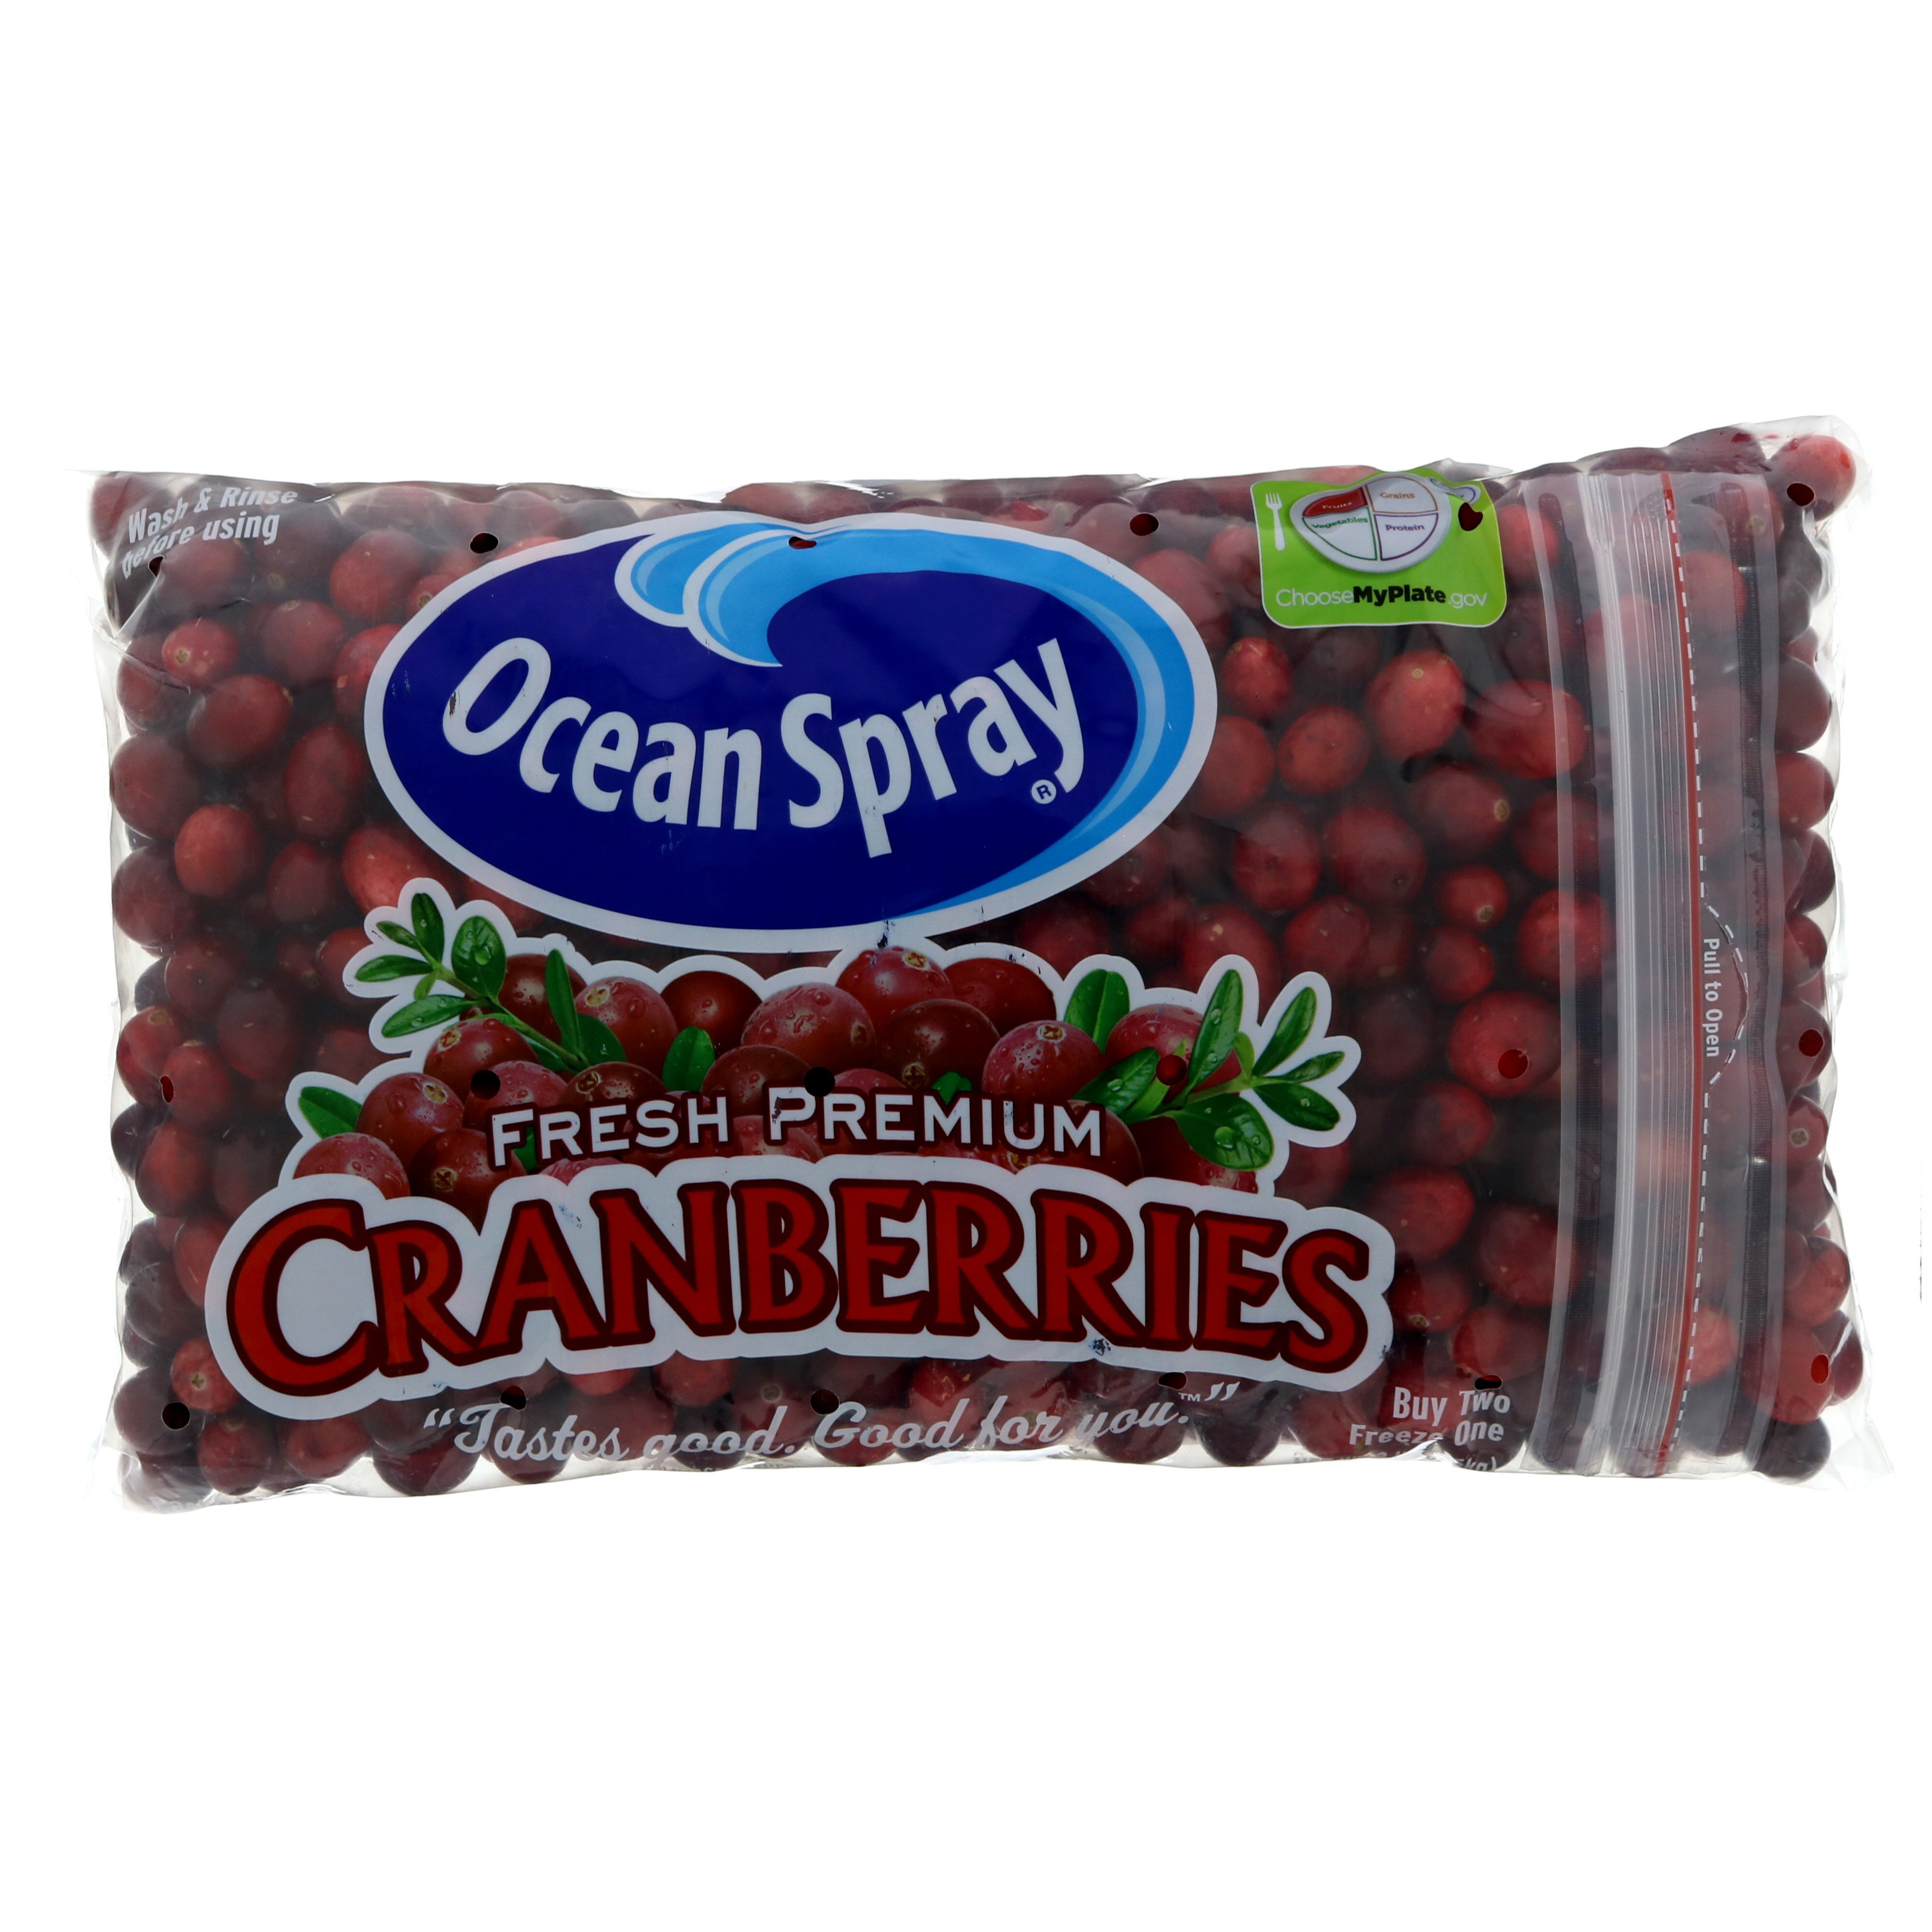 Ocean Spray Fresh Premium Cranberries Shop Fruit at HEB